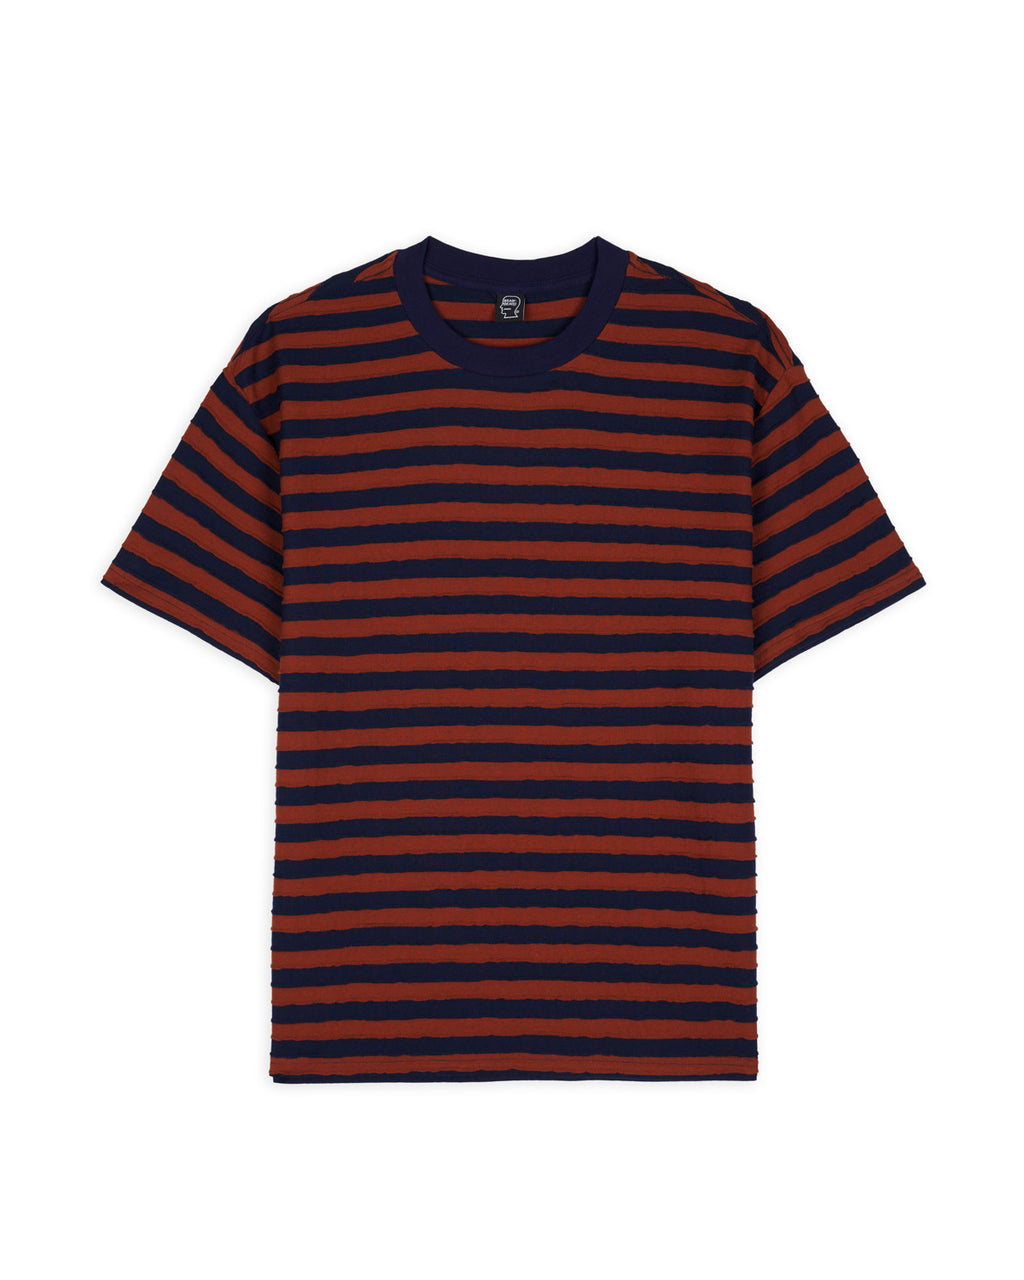 Denny Blaine Striped T-Shirt - Navy/Light Brown 1